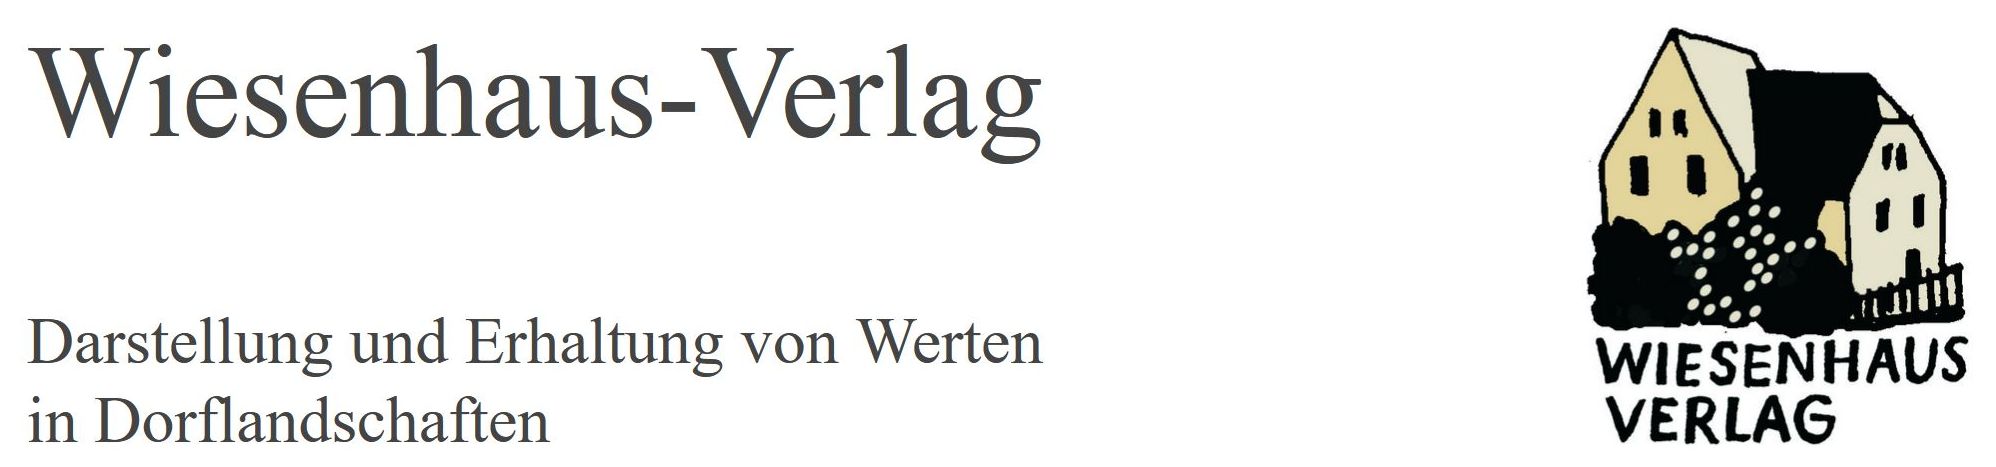 Wiesenhaus-Verlag